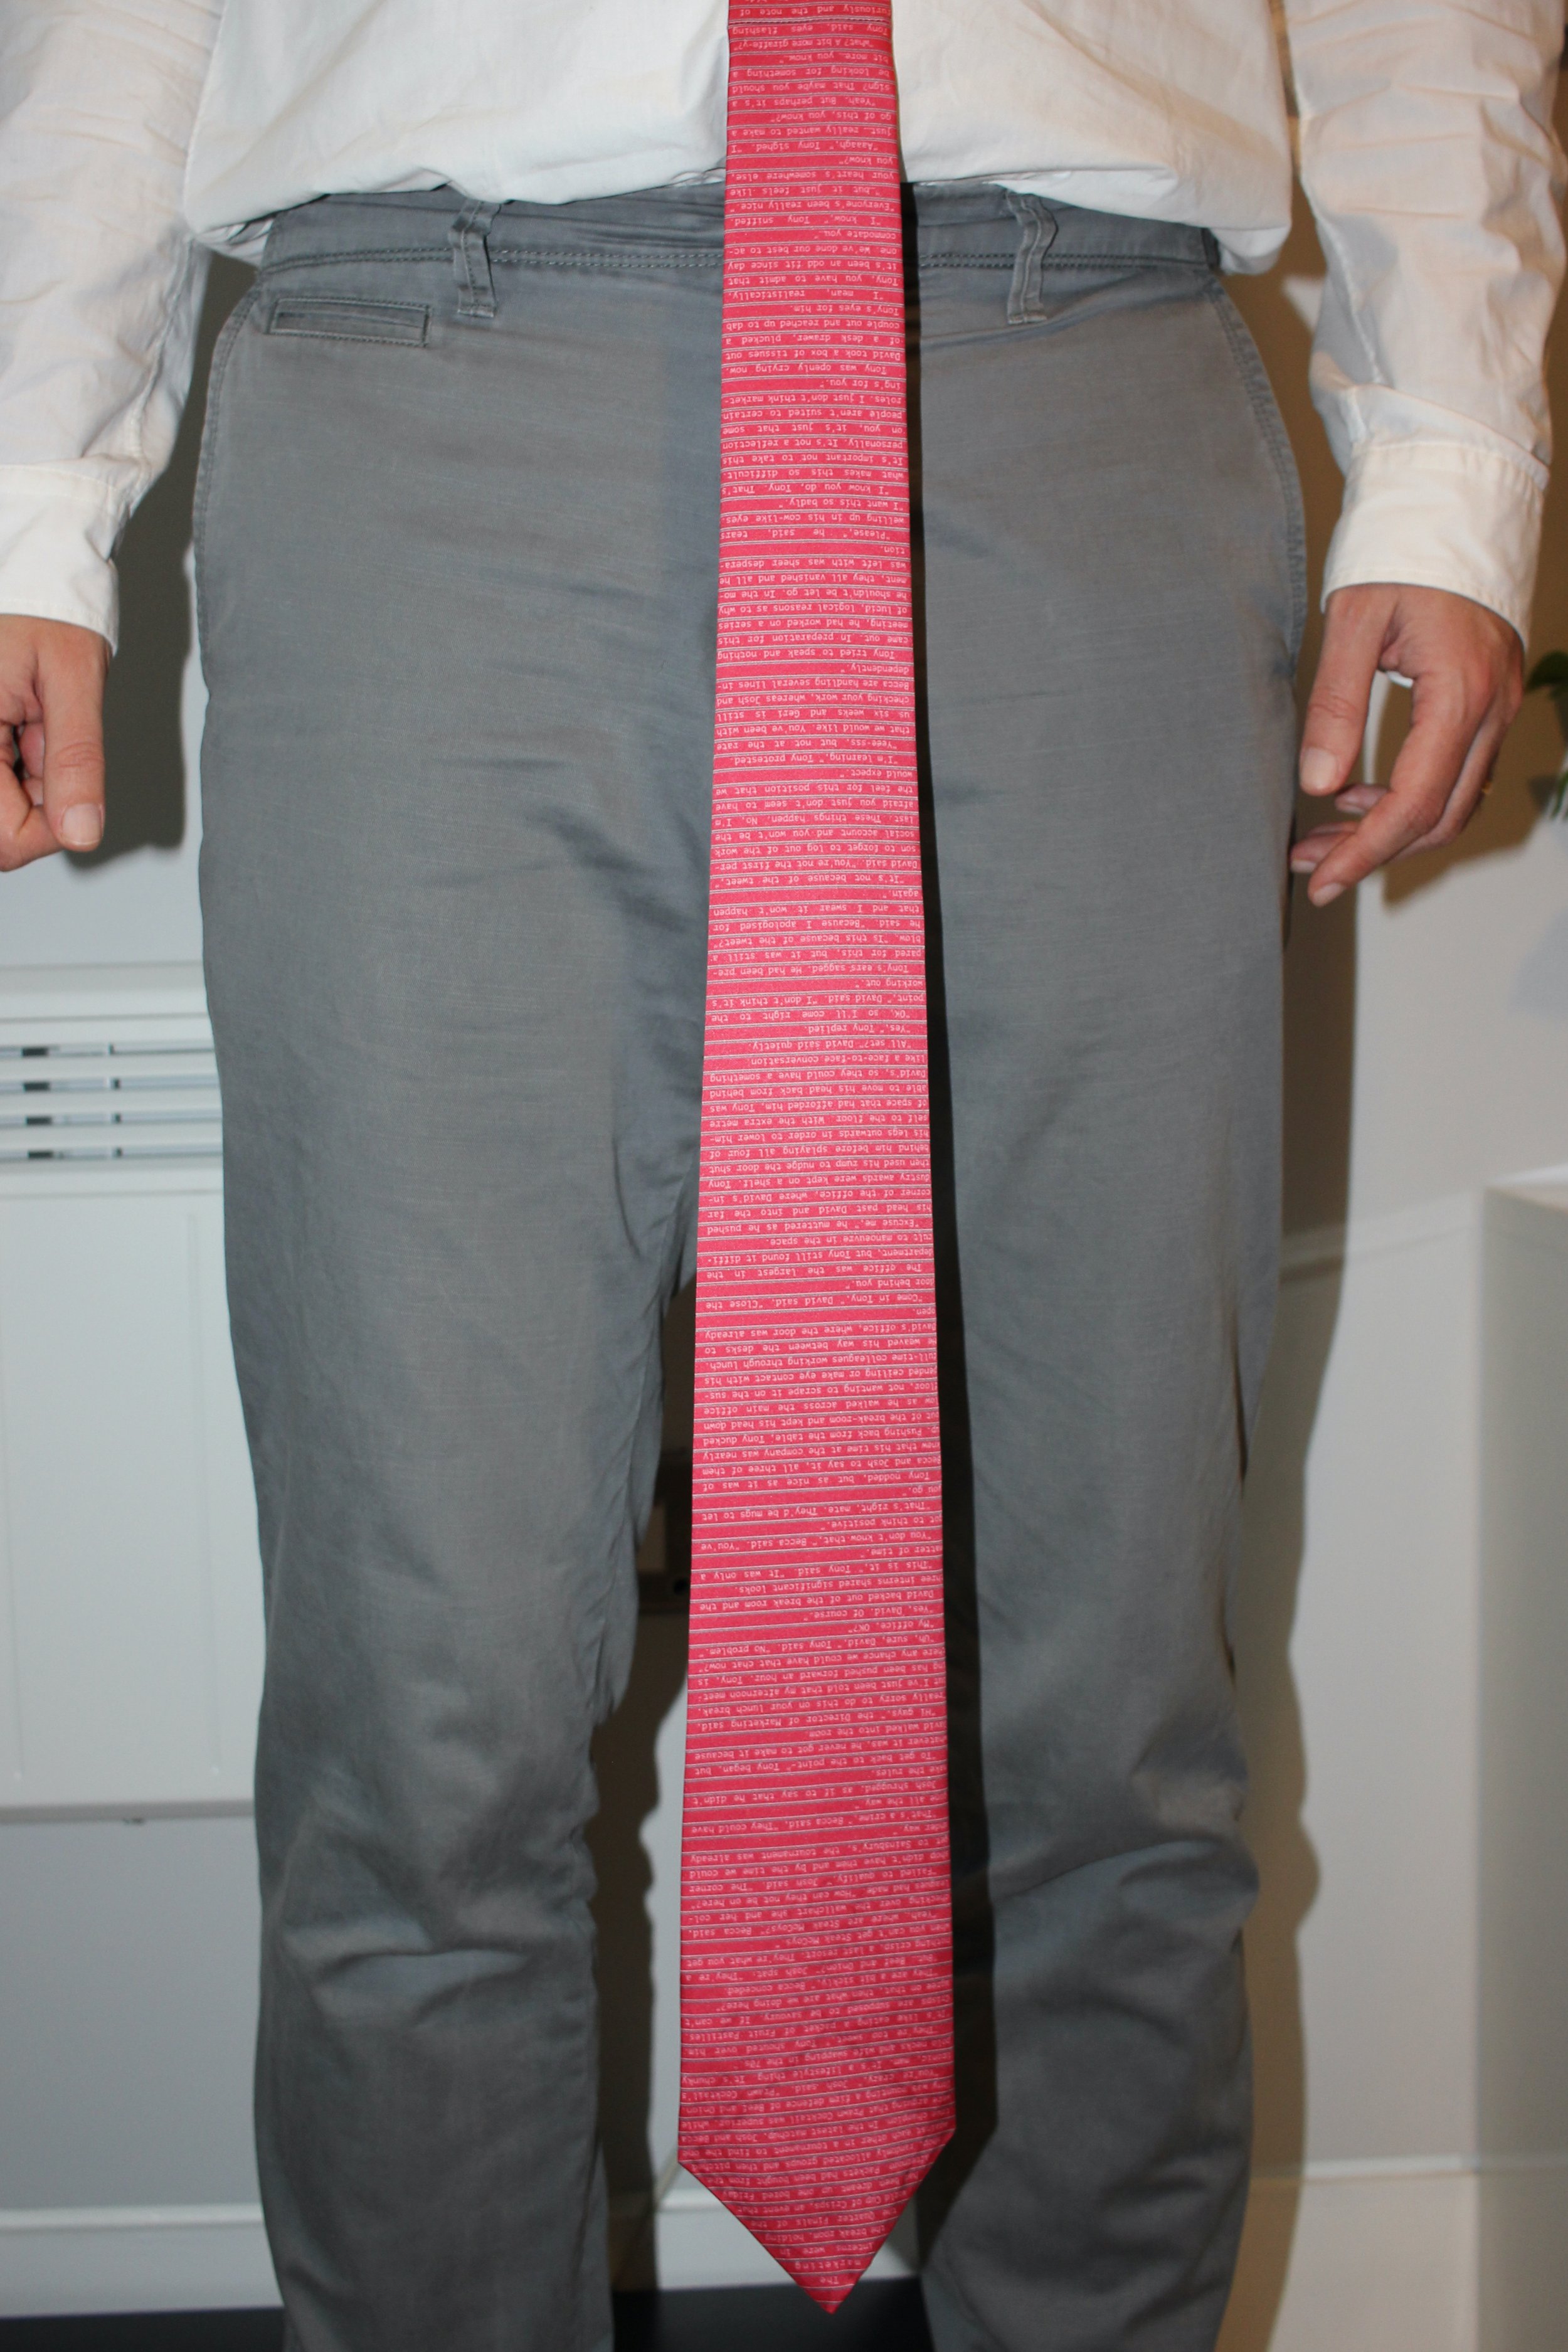 Tie worn by idiot (2)